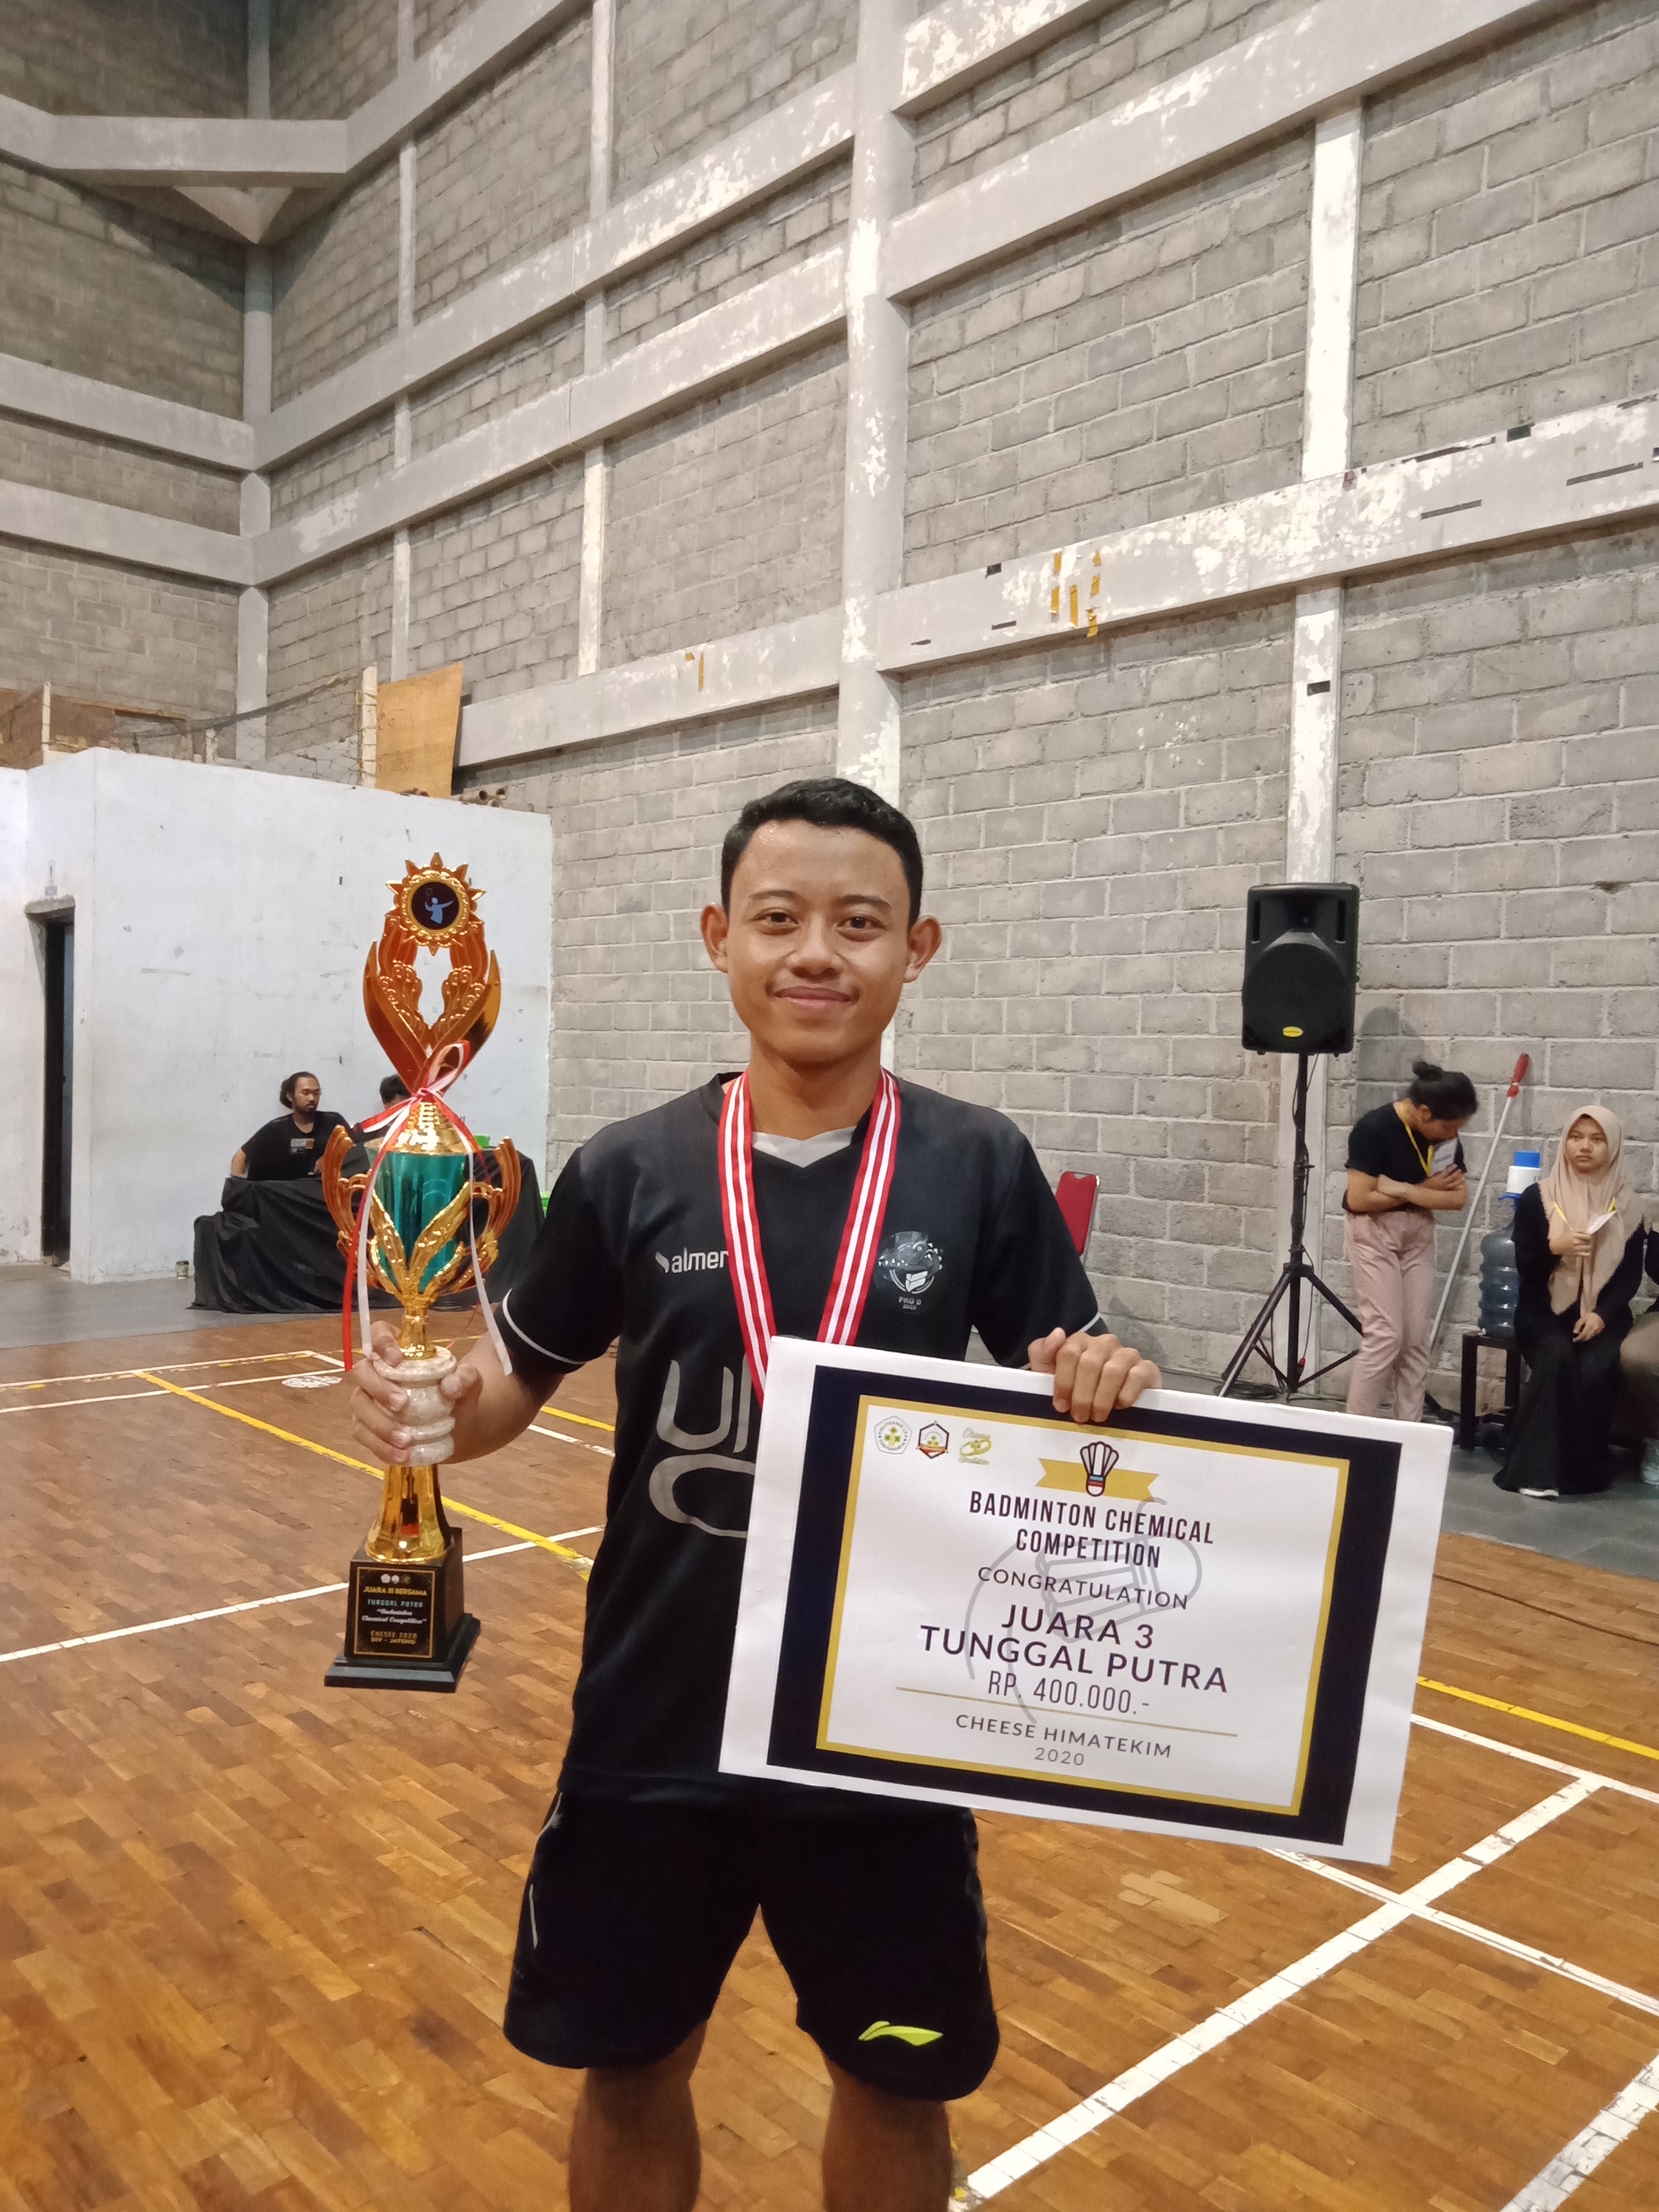 Foto Badminton Chemical Competition 2020